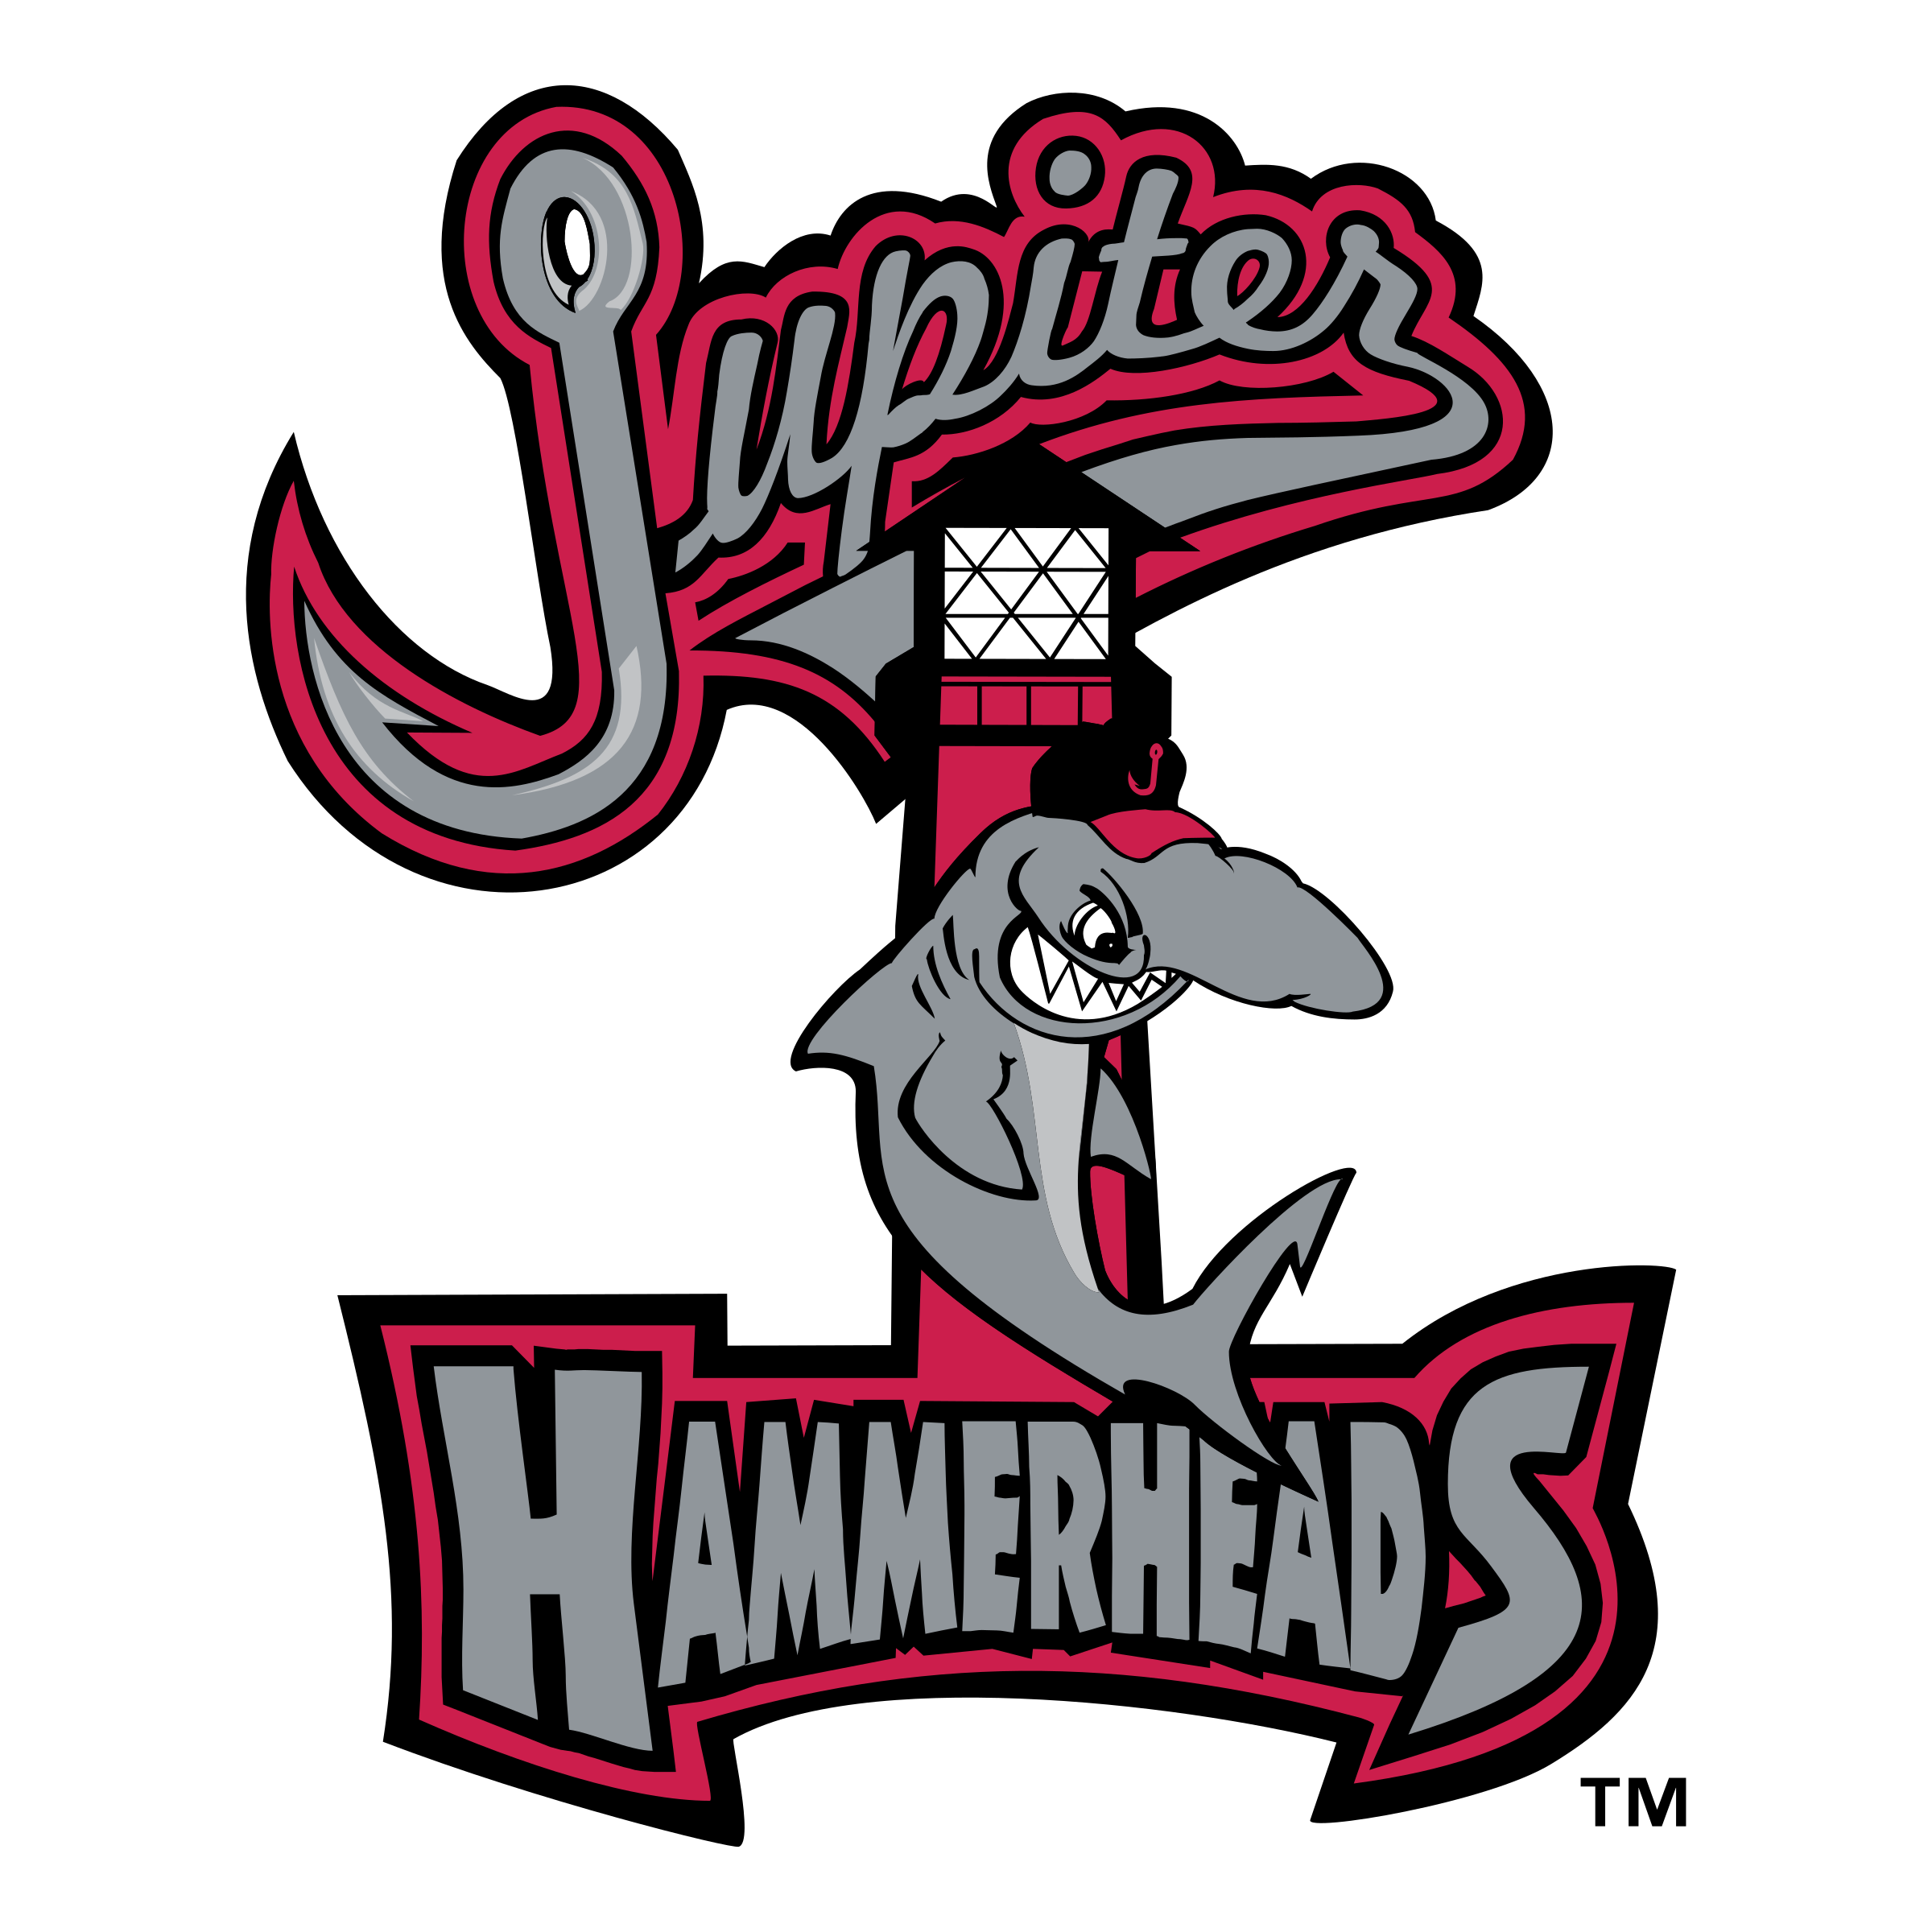 Hammerheads logo png transparent. Jupiter clipart vector